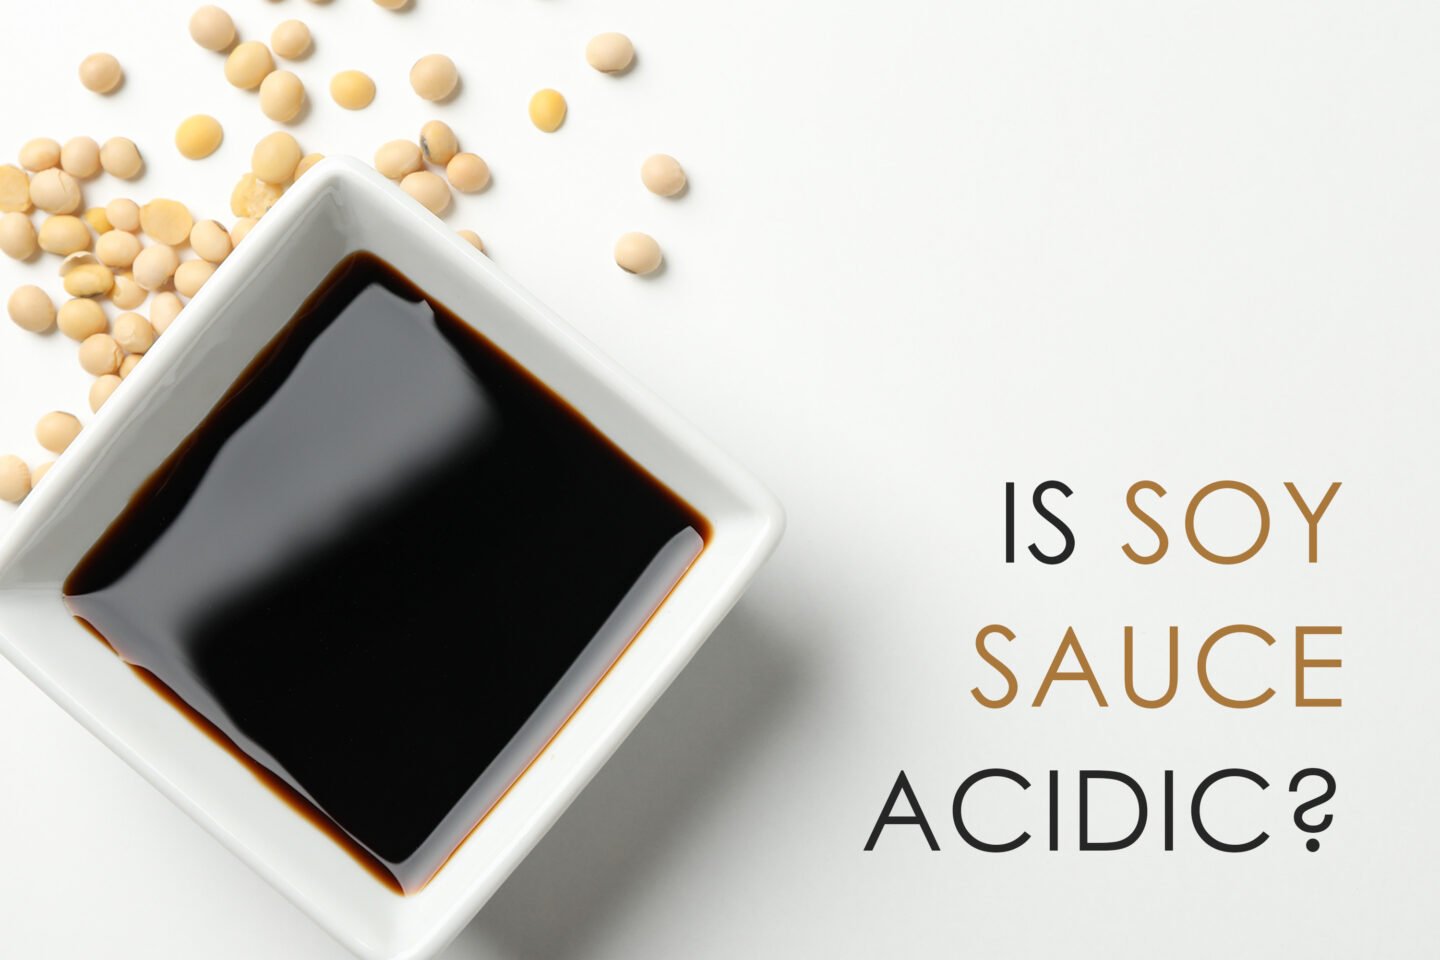 is soy sauce acidic or alkaline